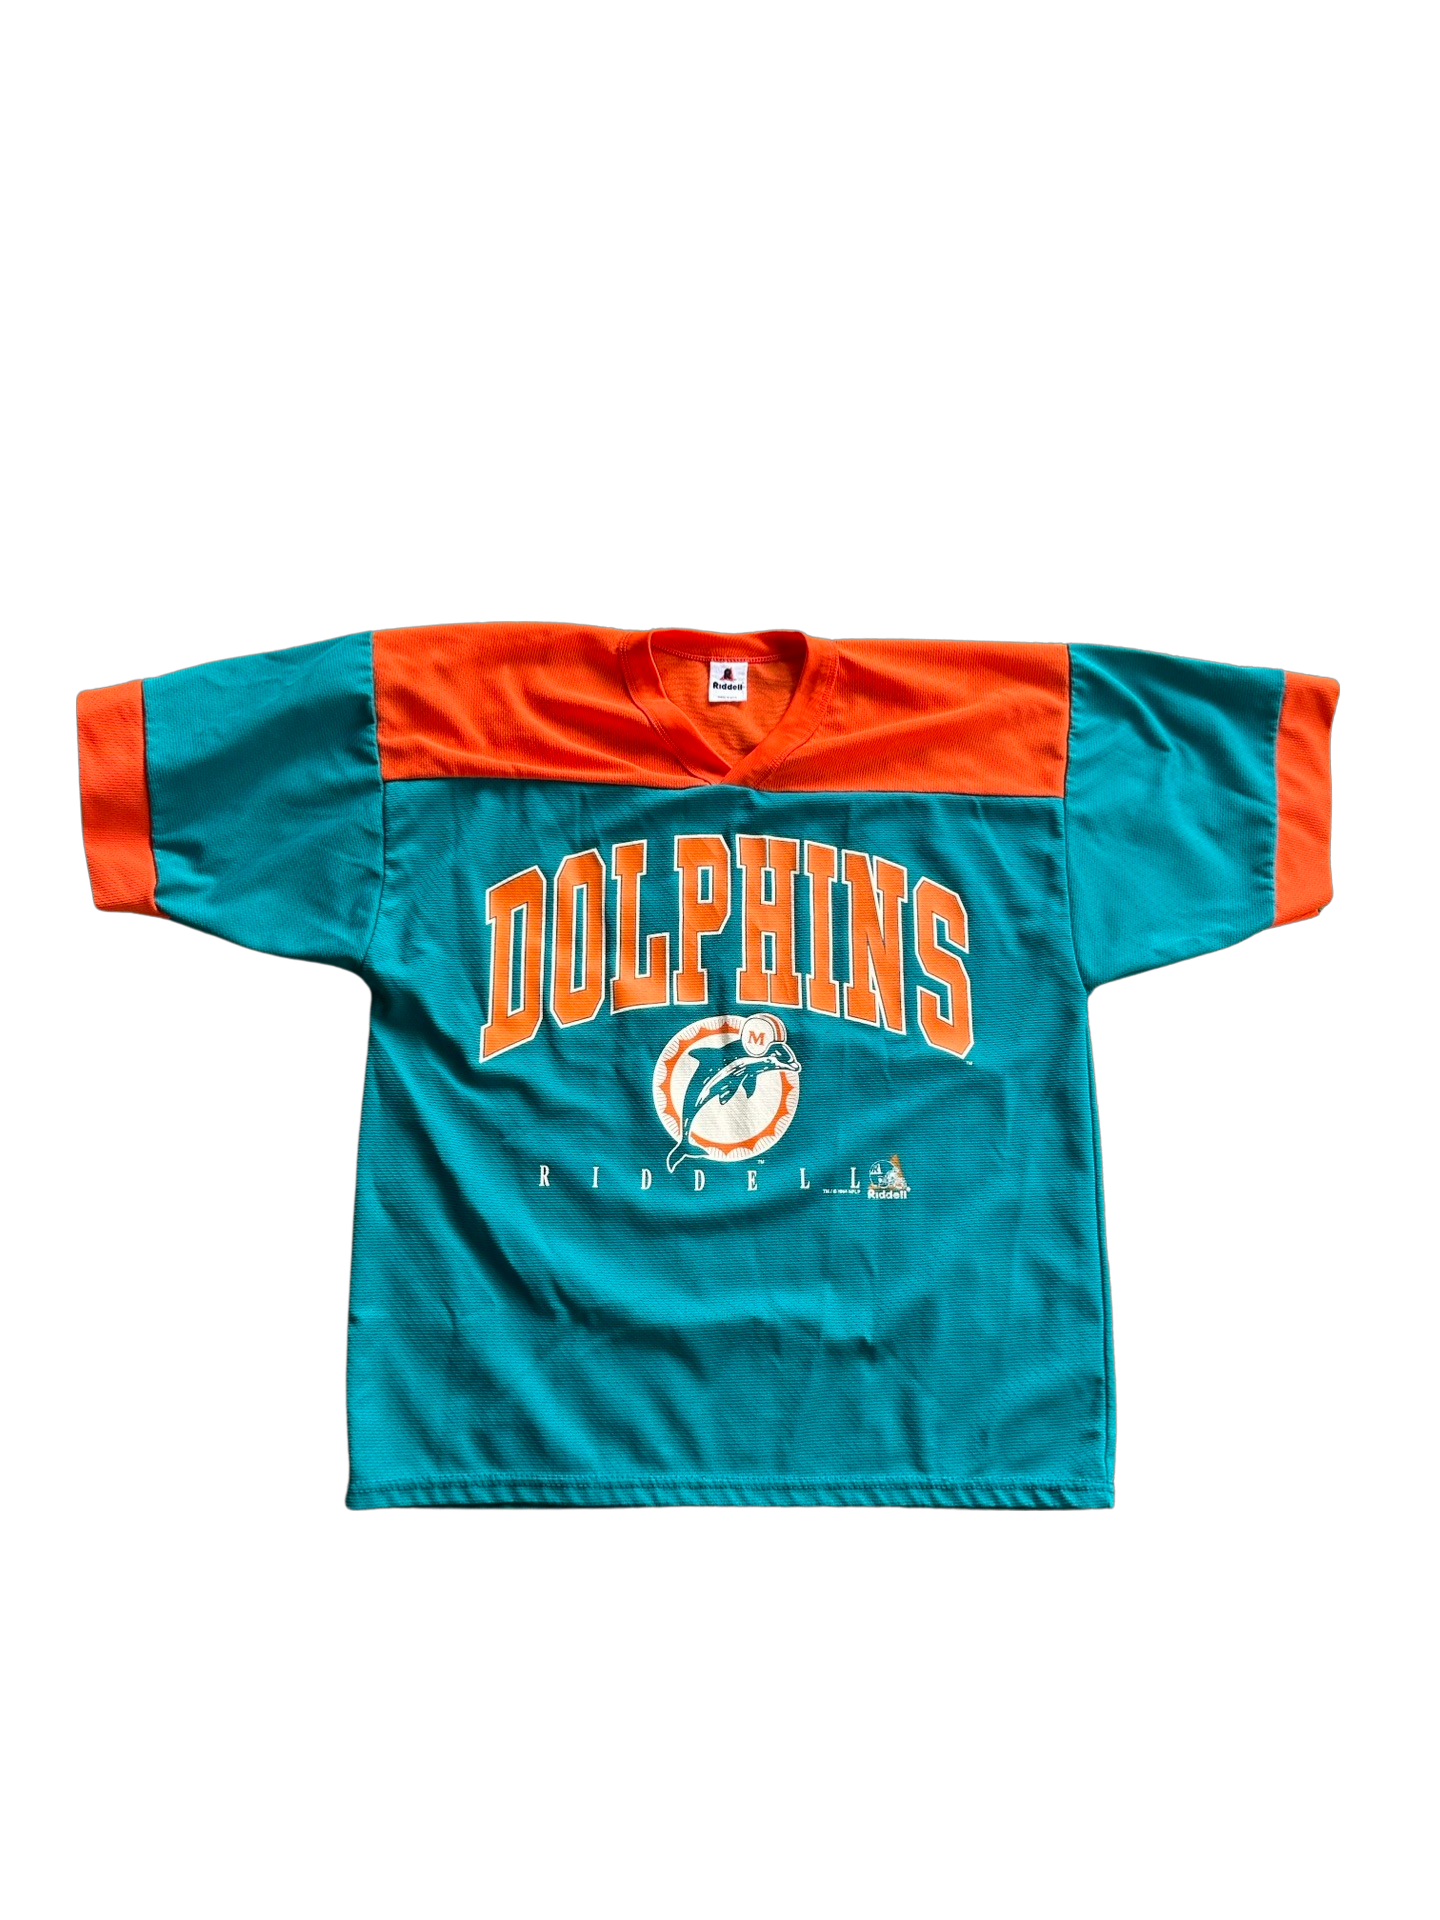 Vintage 1996 Miami Dolphins Quarter Sleeve